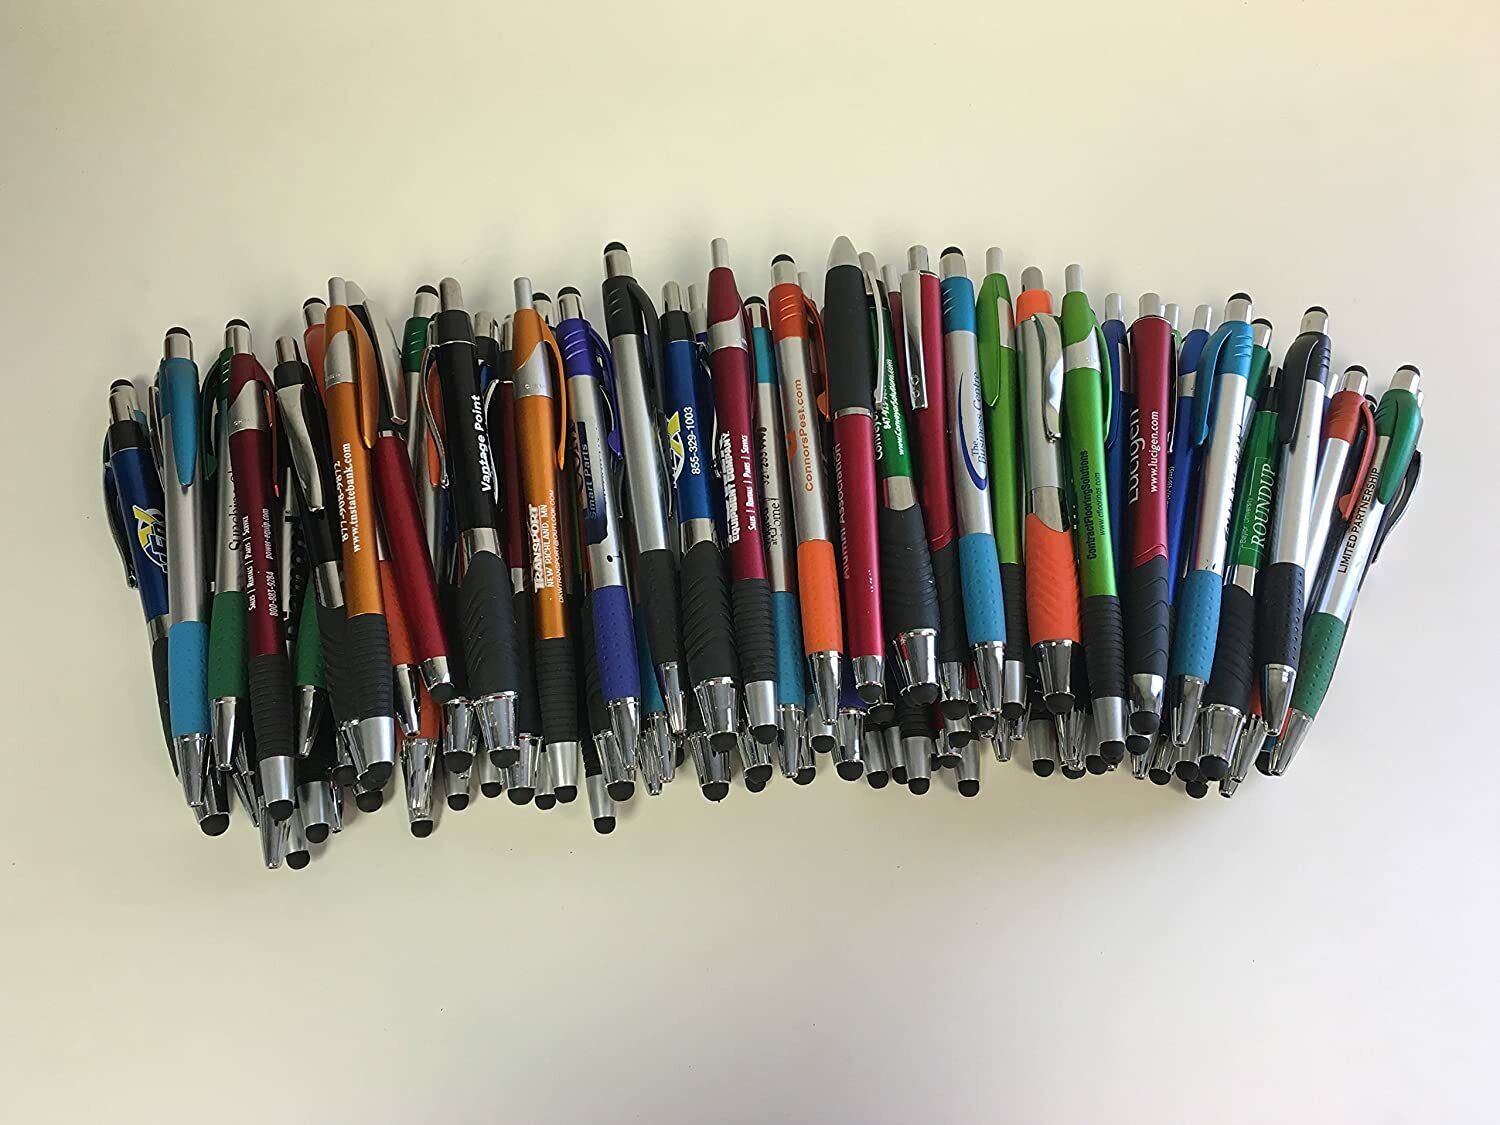 Bulk Lot of 500 Pens - Misprint Plastic Retractable Ball Point Pens with Stylus